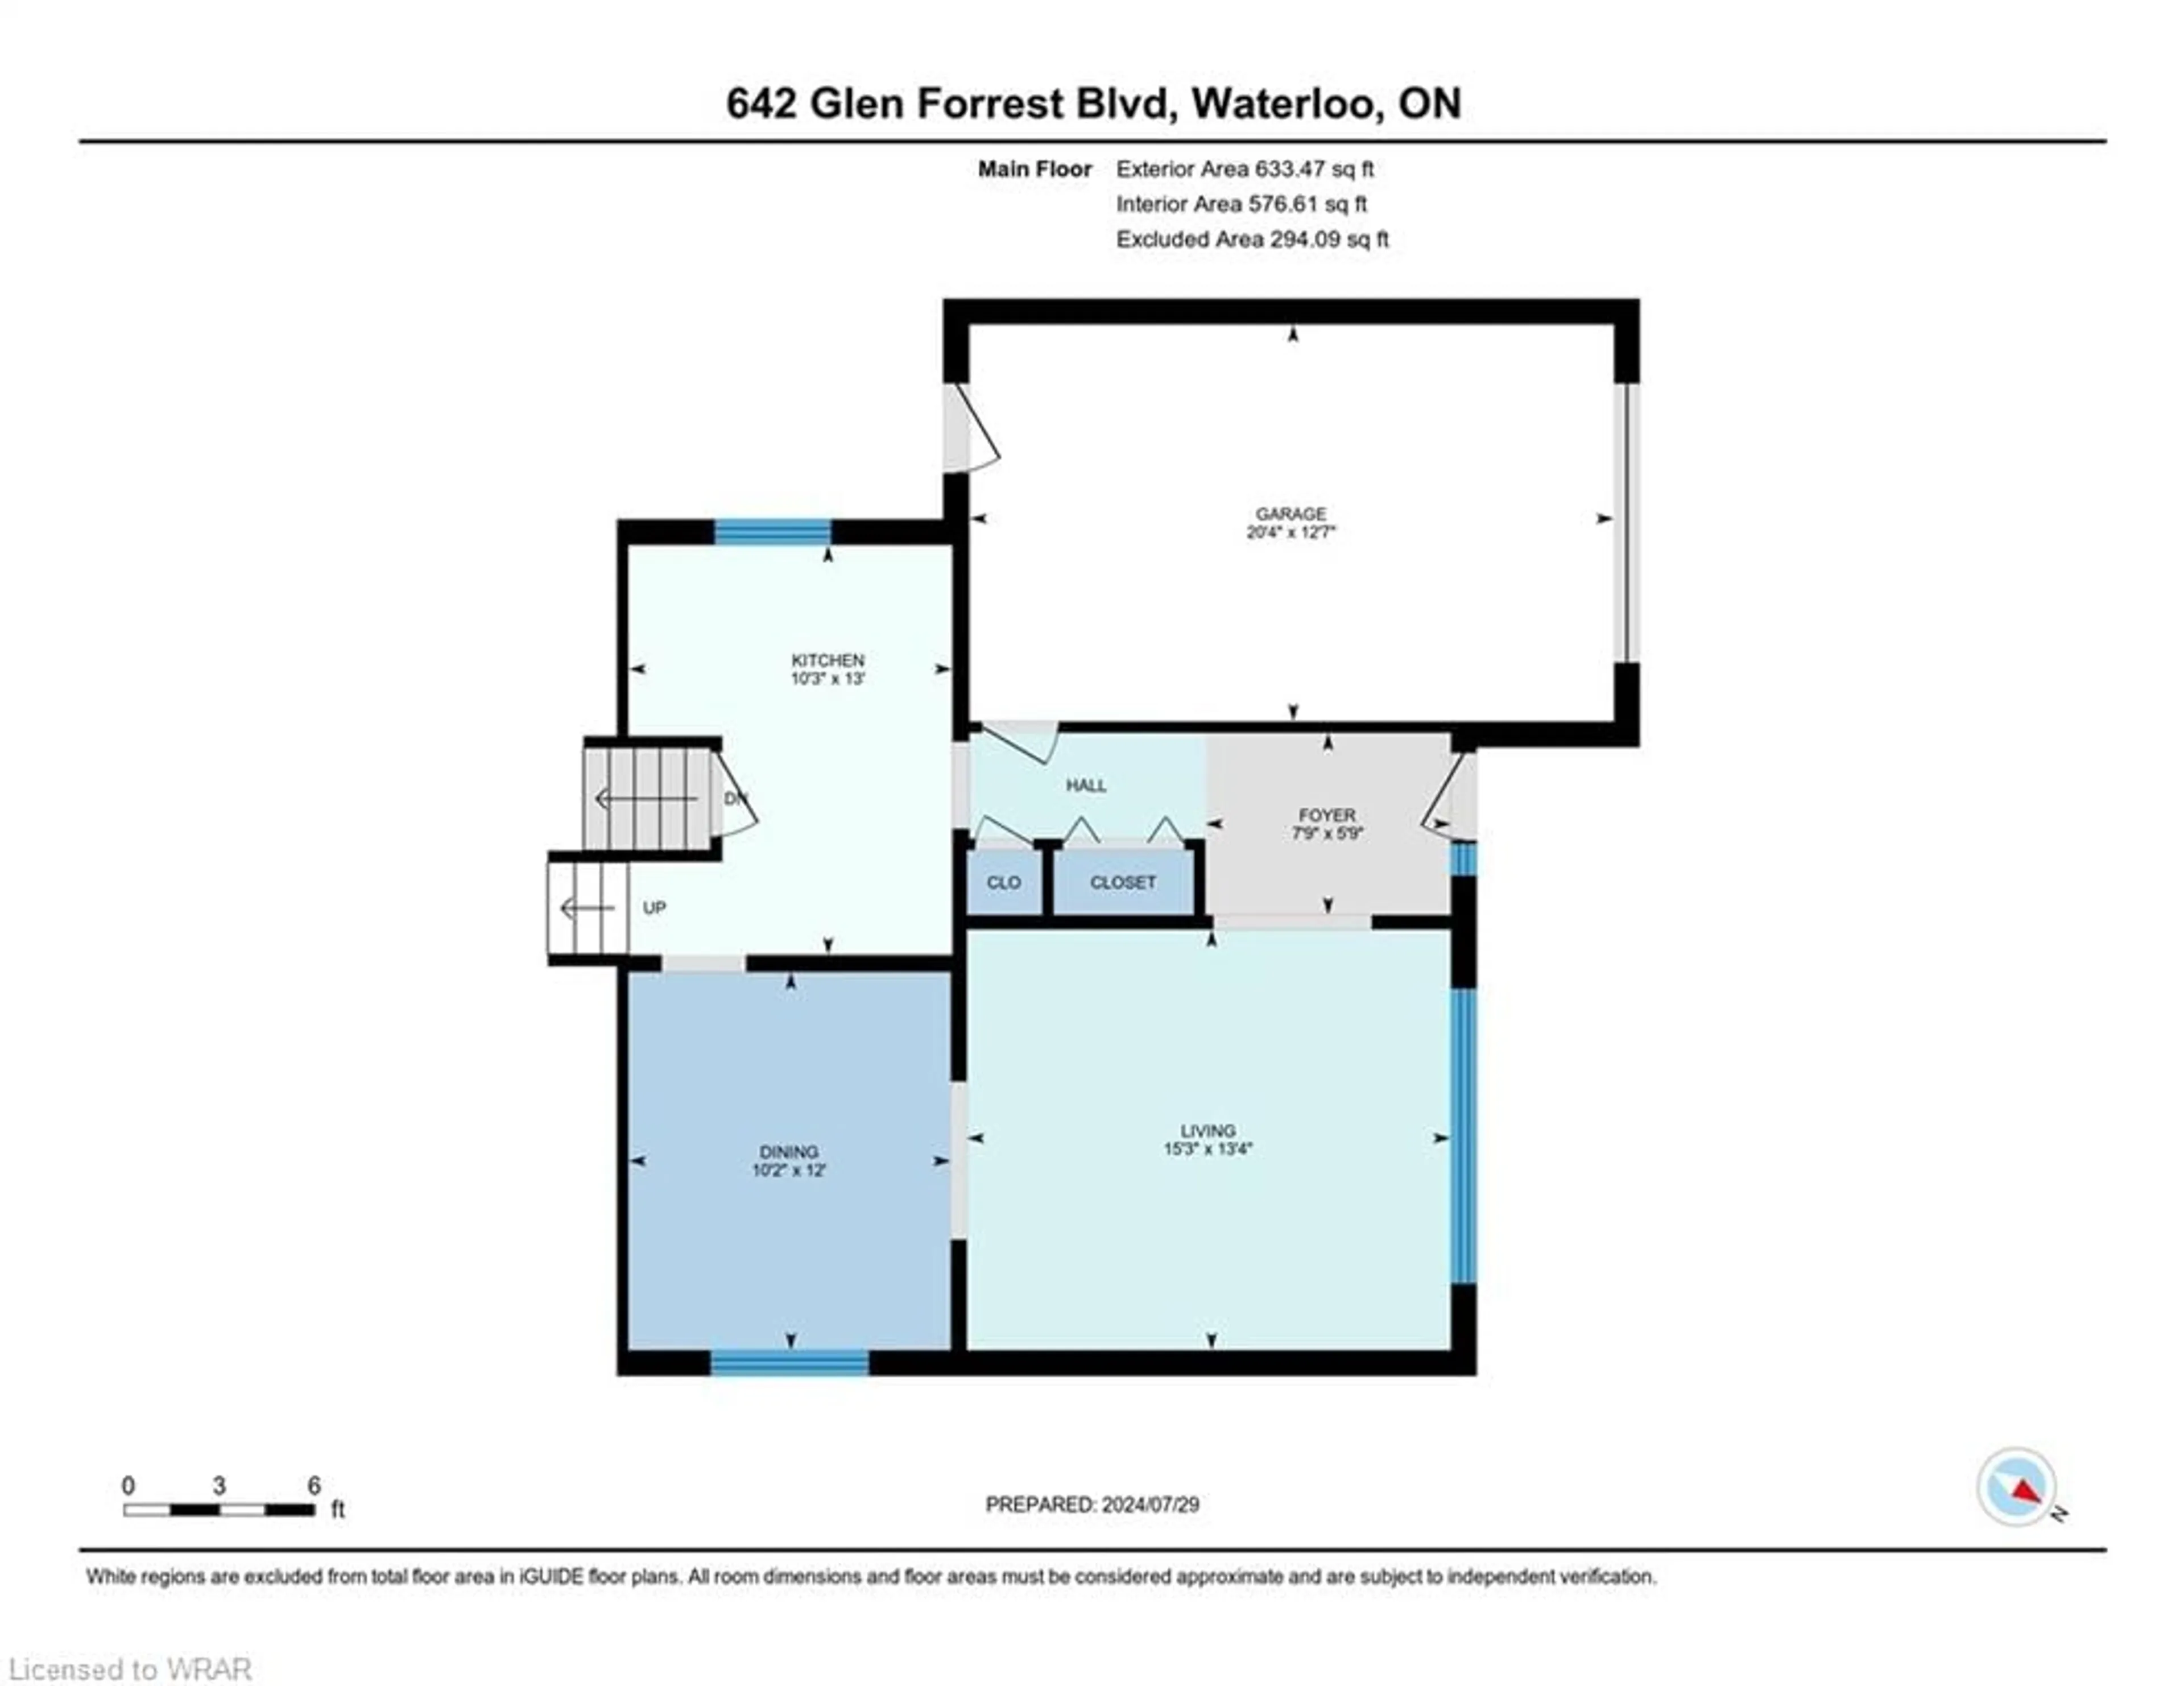 Floor plan for 642 Glen Forrest Blvd, Waterloo Ontario N2L 4K2